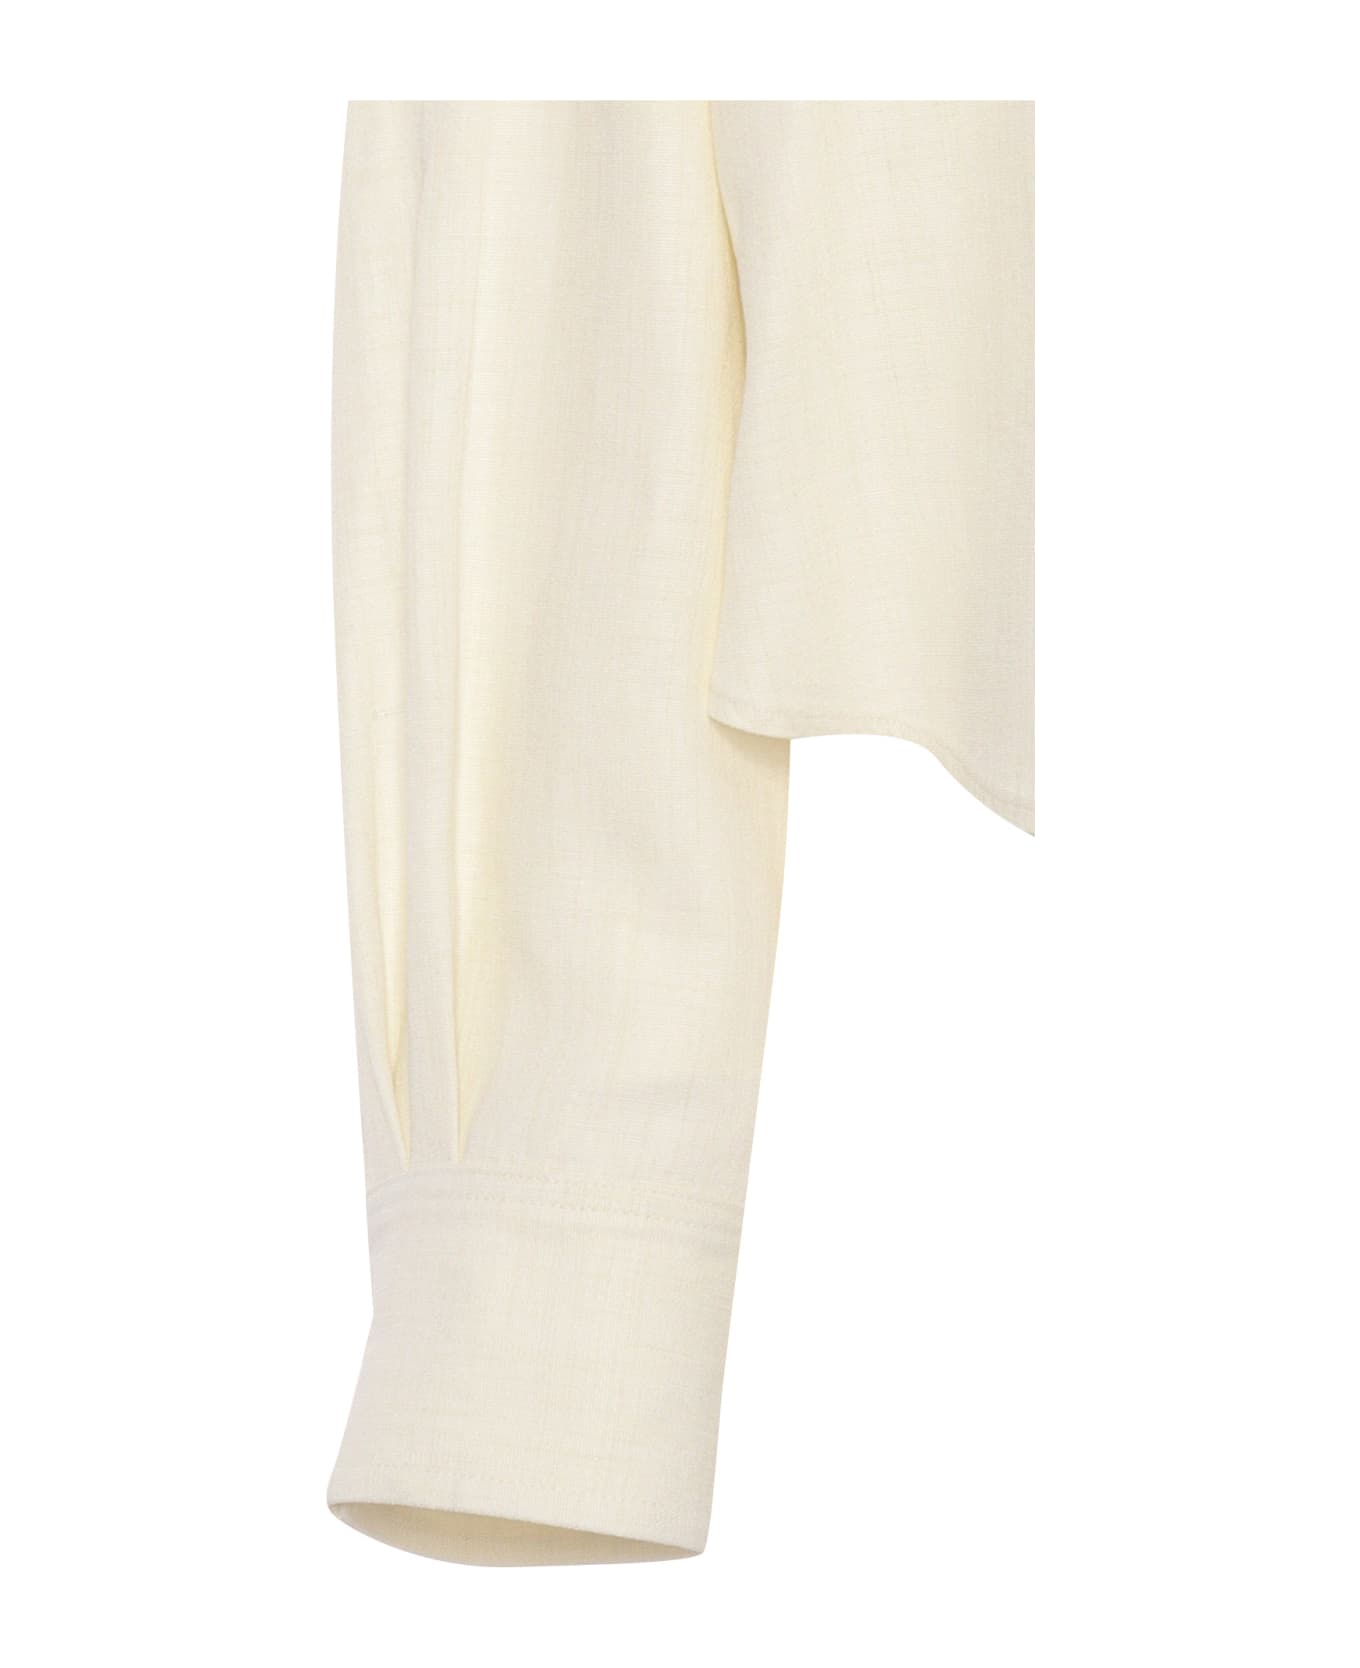 Fabiana Filippi Cream Colored Jacket - WHITE